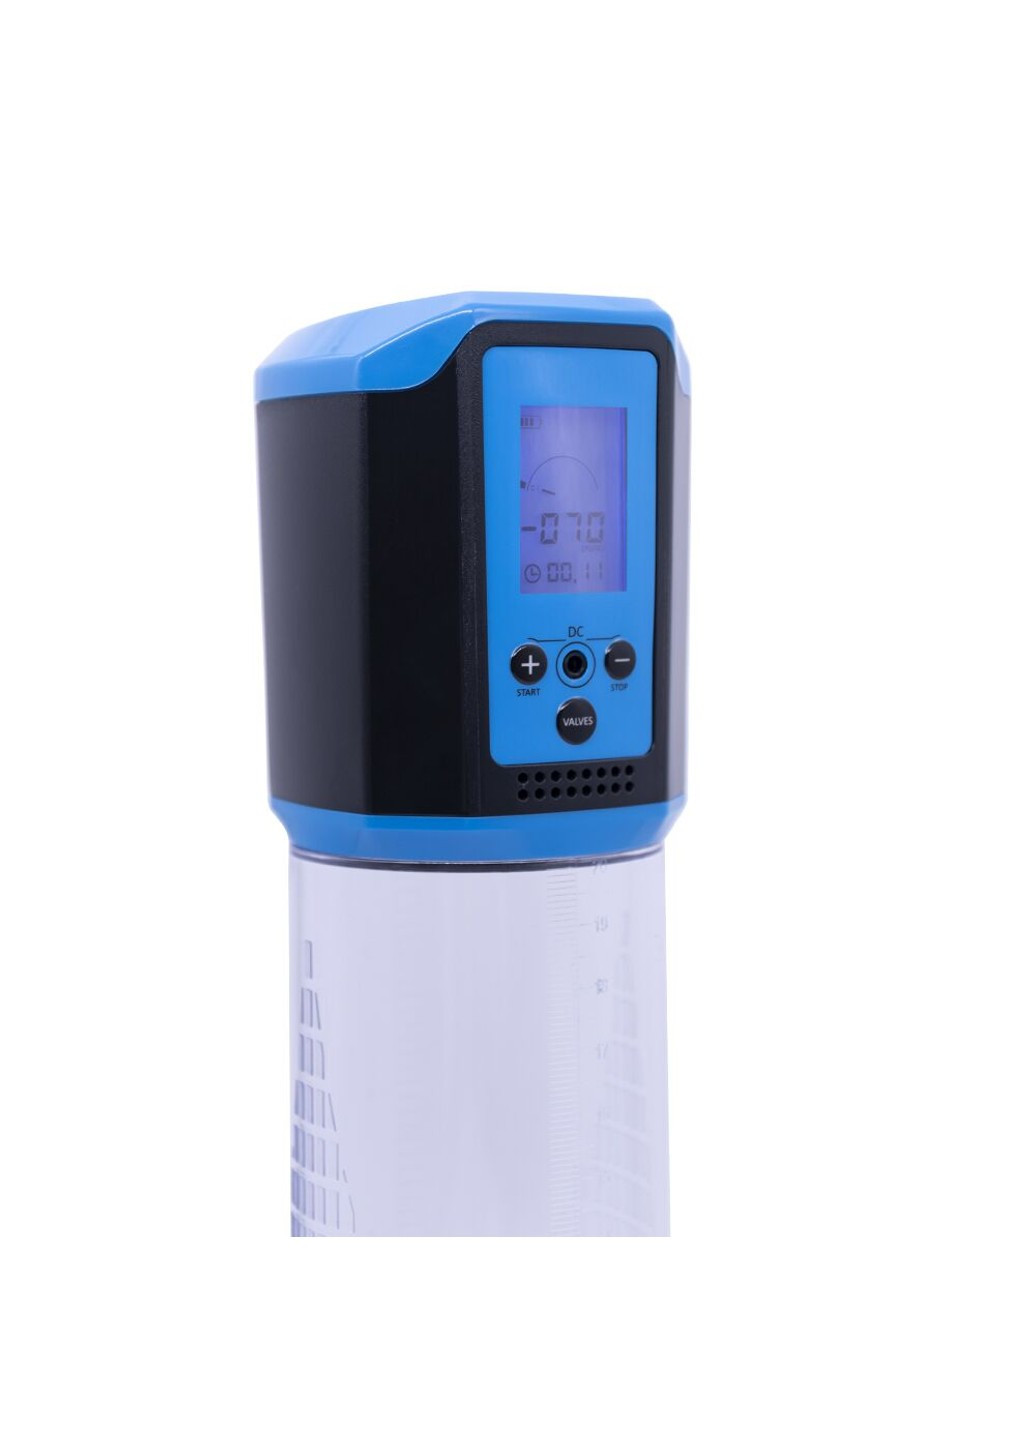 Автоматична вакуумна помпа Passion Pump Blue, LED-табло, перезаряджувана, 8 режимів Men Powerup (258261902)